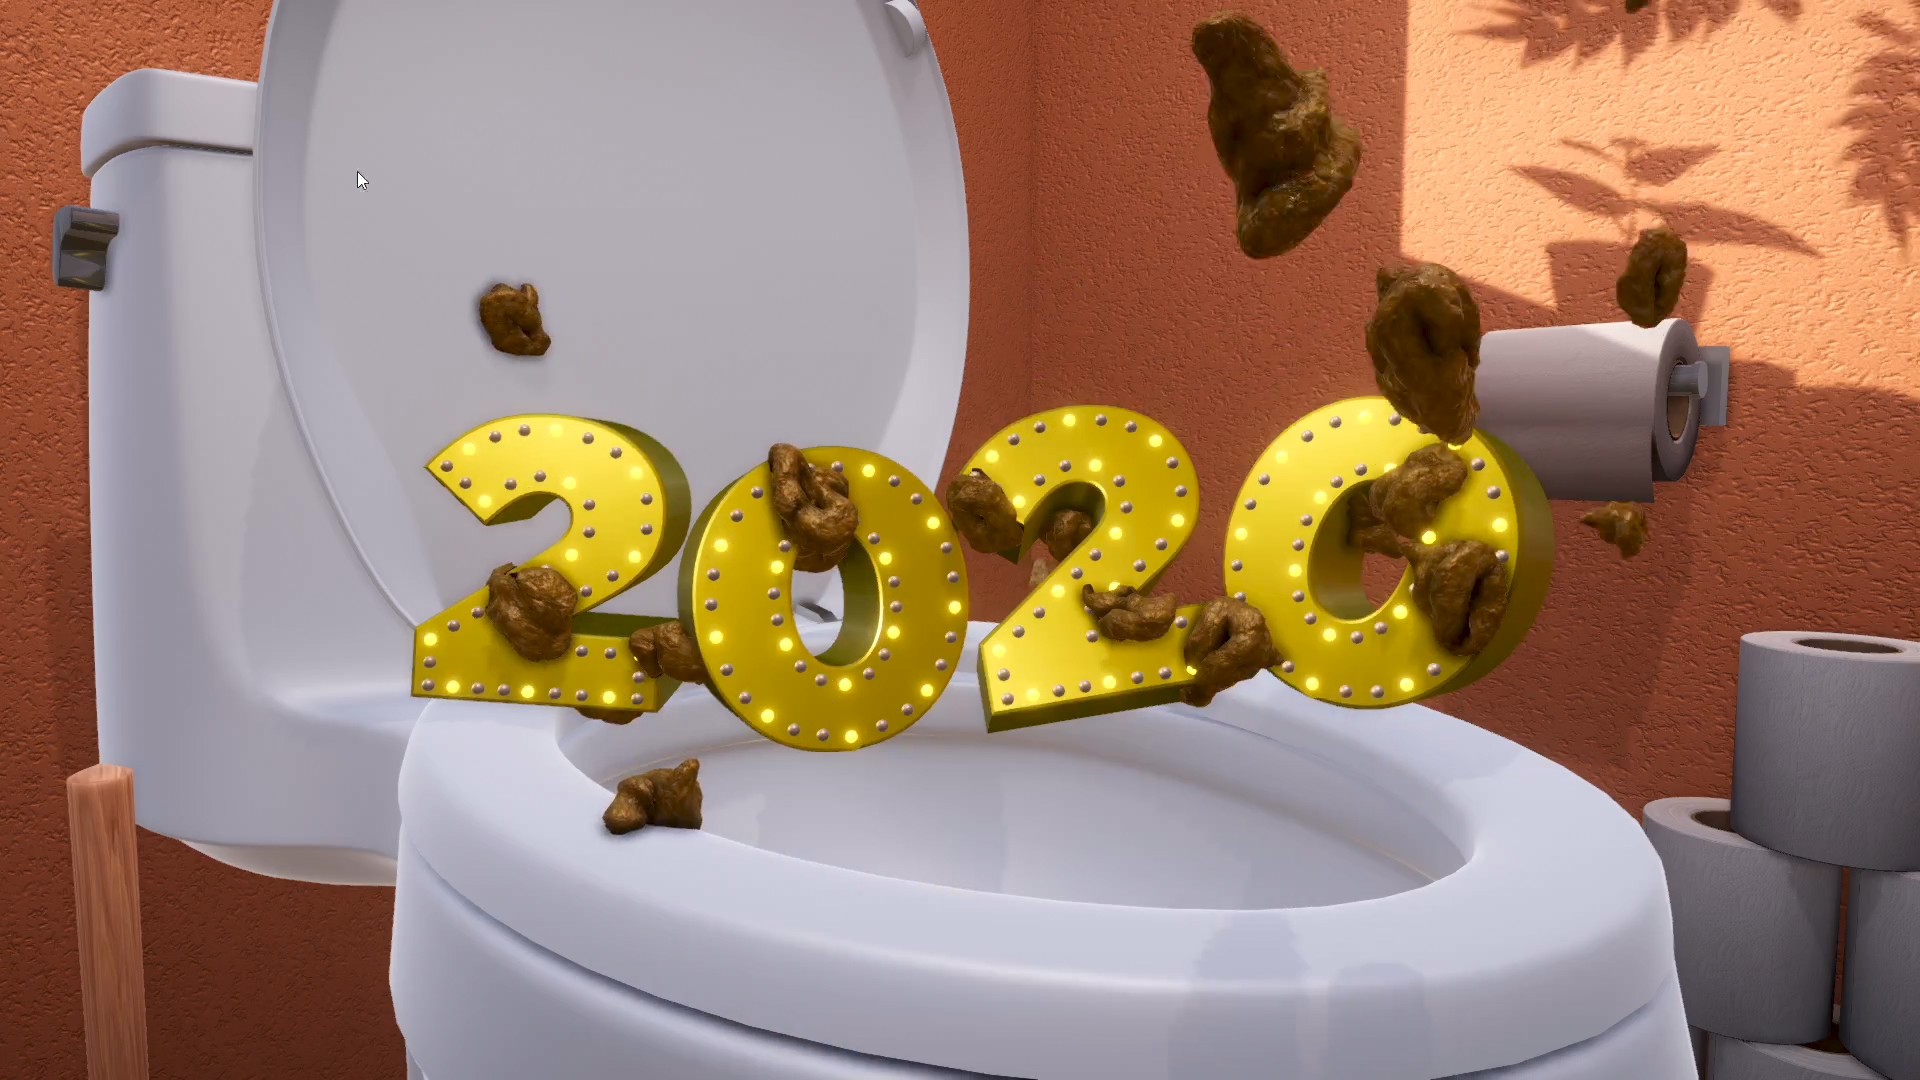 Poop On 2020 Simulator Demo Featured Screenshot #1